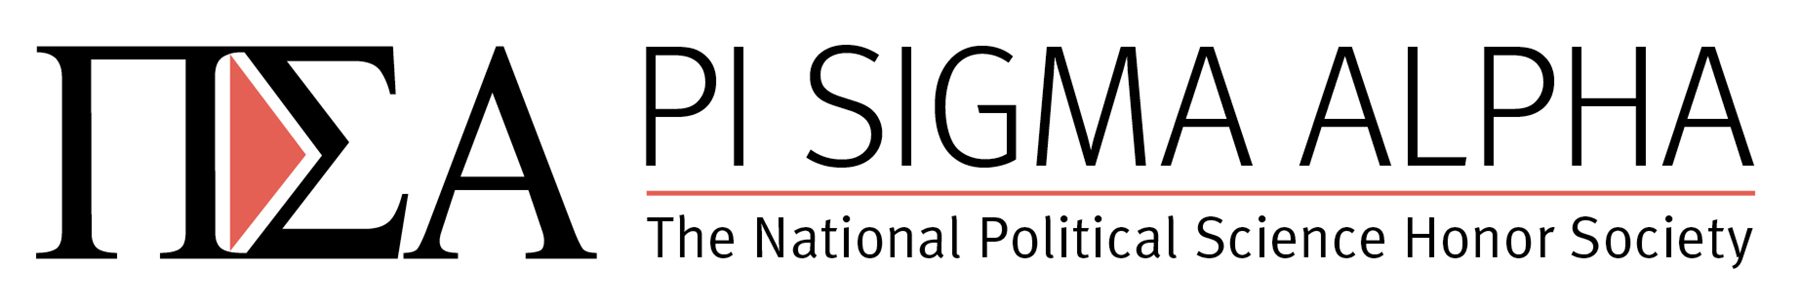 Pi Sigma Alpha Logo - The National Political Science Honor Society